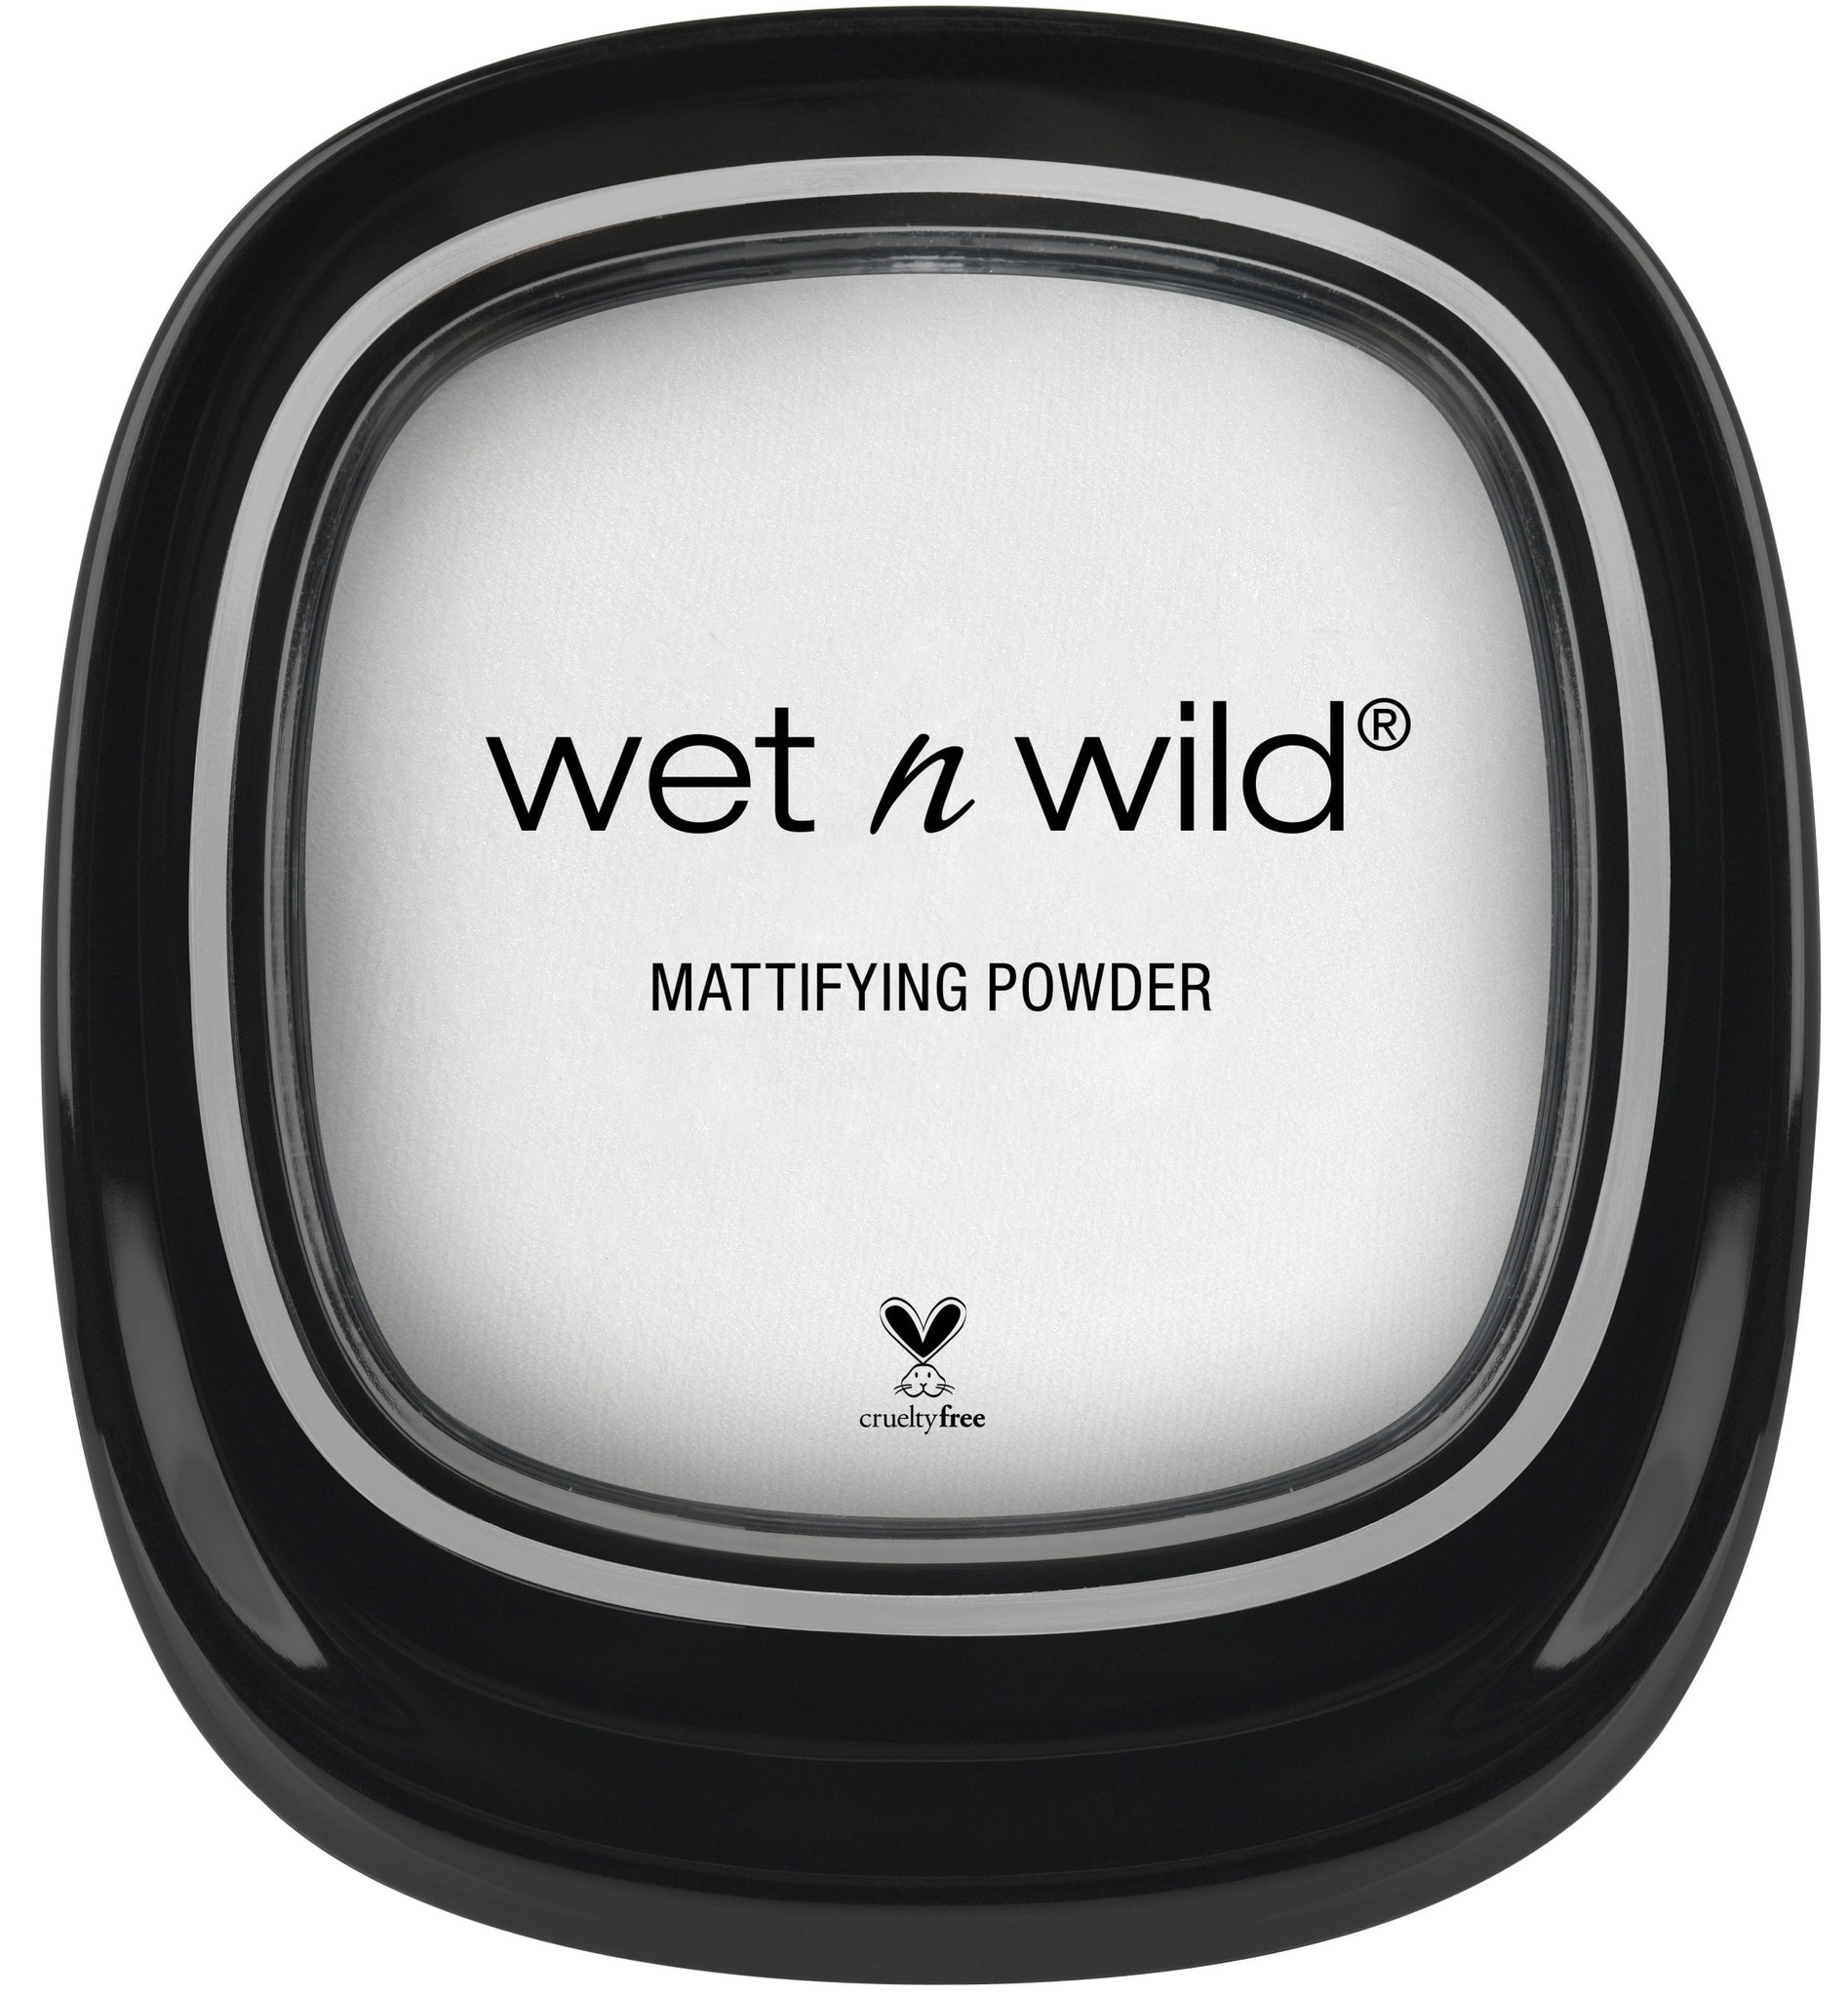 Wet n Wild Mattifying Powder